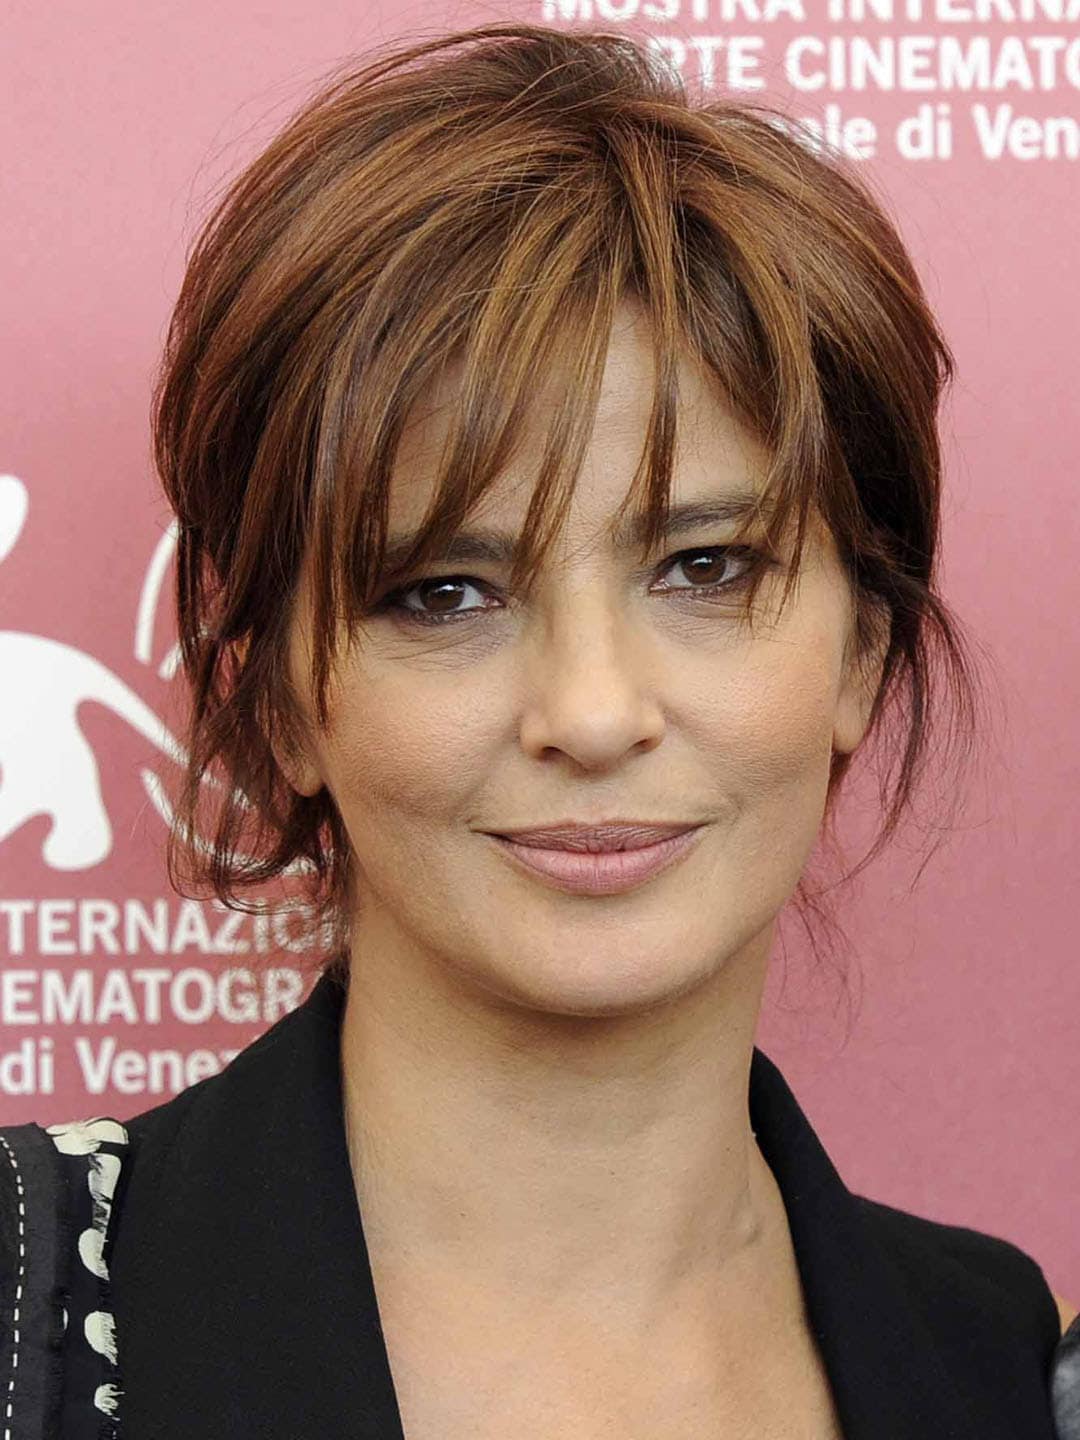 Laura Morante Italian Actress, Director, Writer